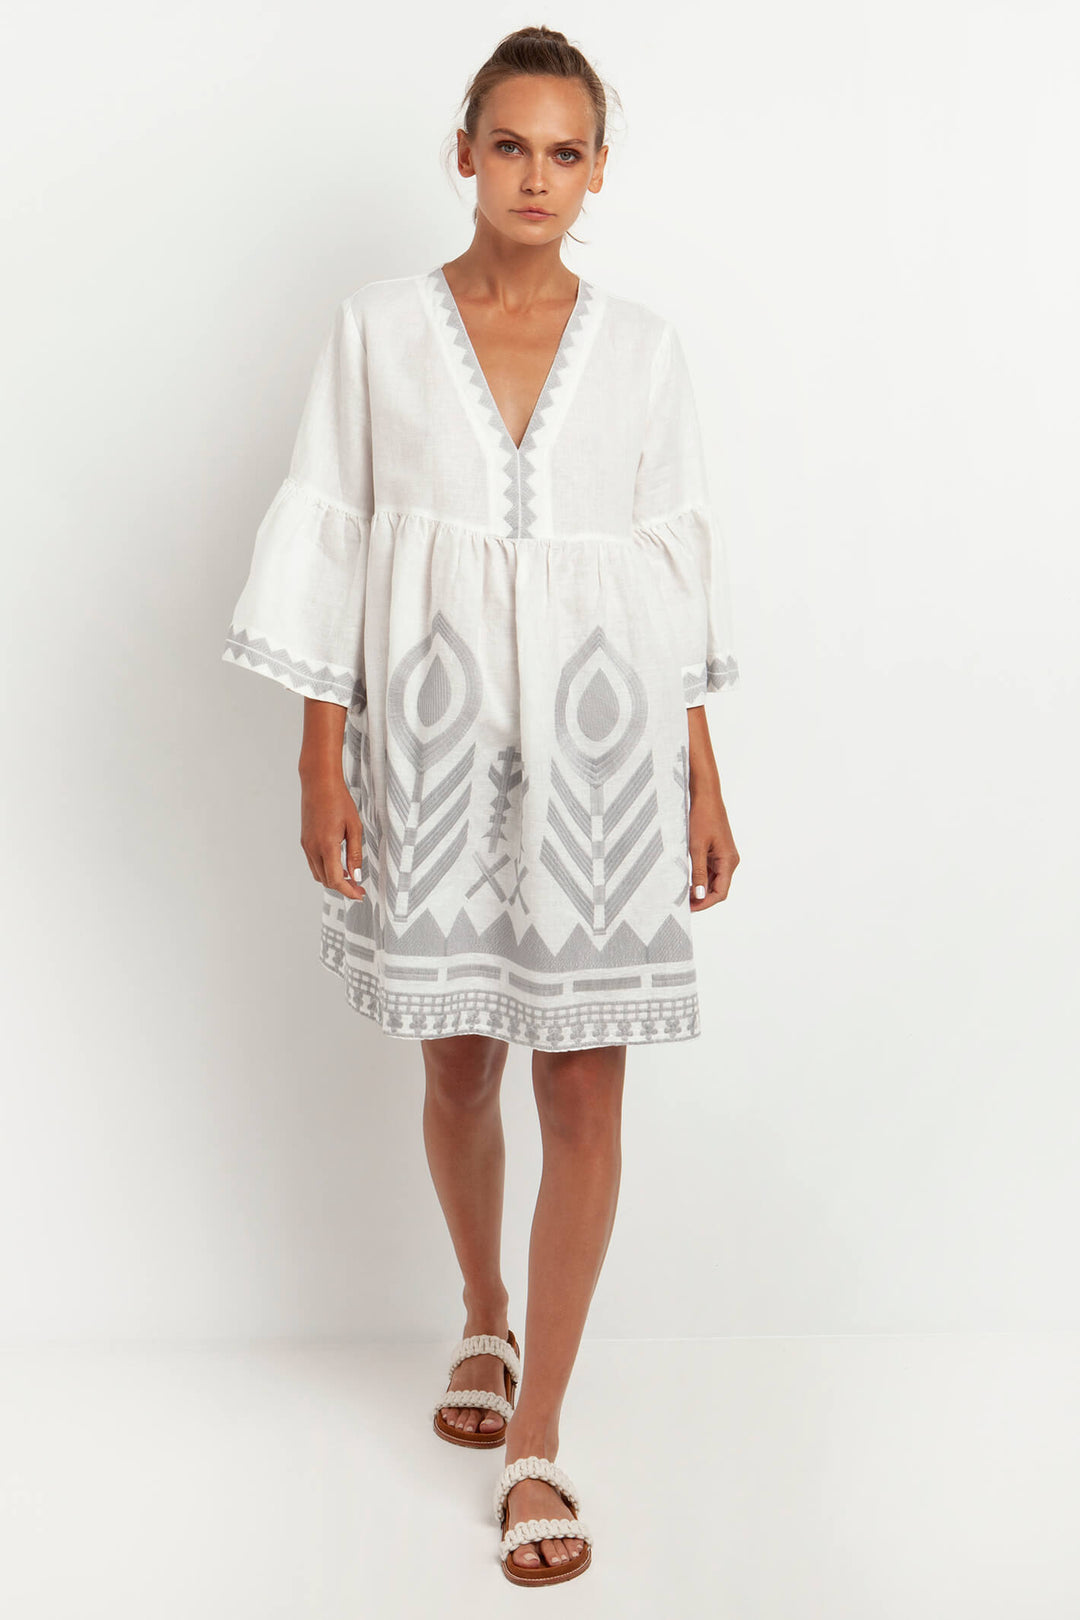 Greek Archaic Kori 230475 White Grey Feather Chevron Dress - Olivia Grace Fashion